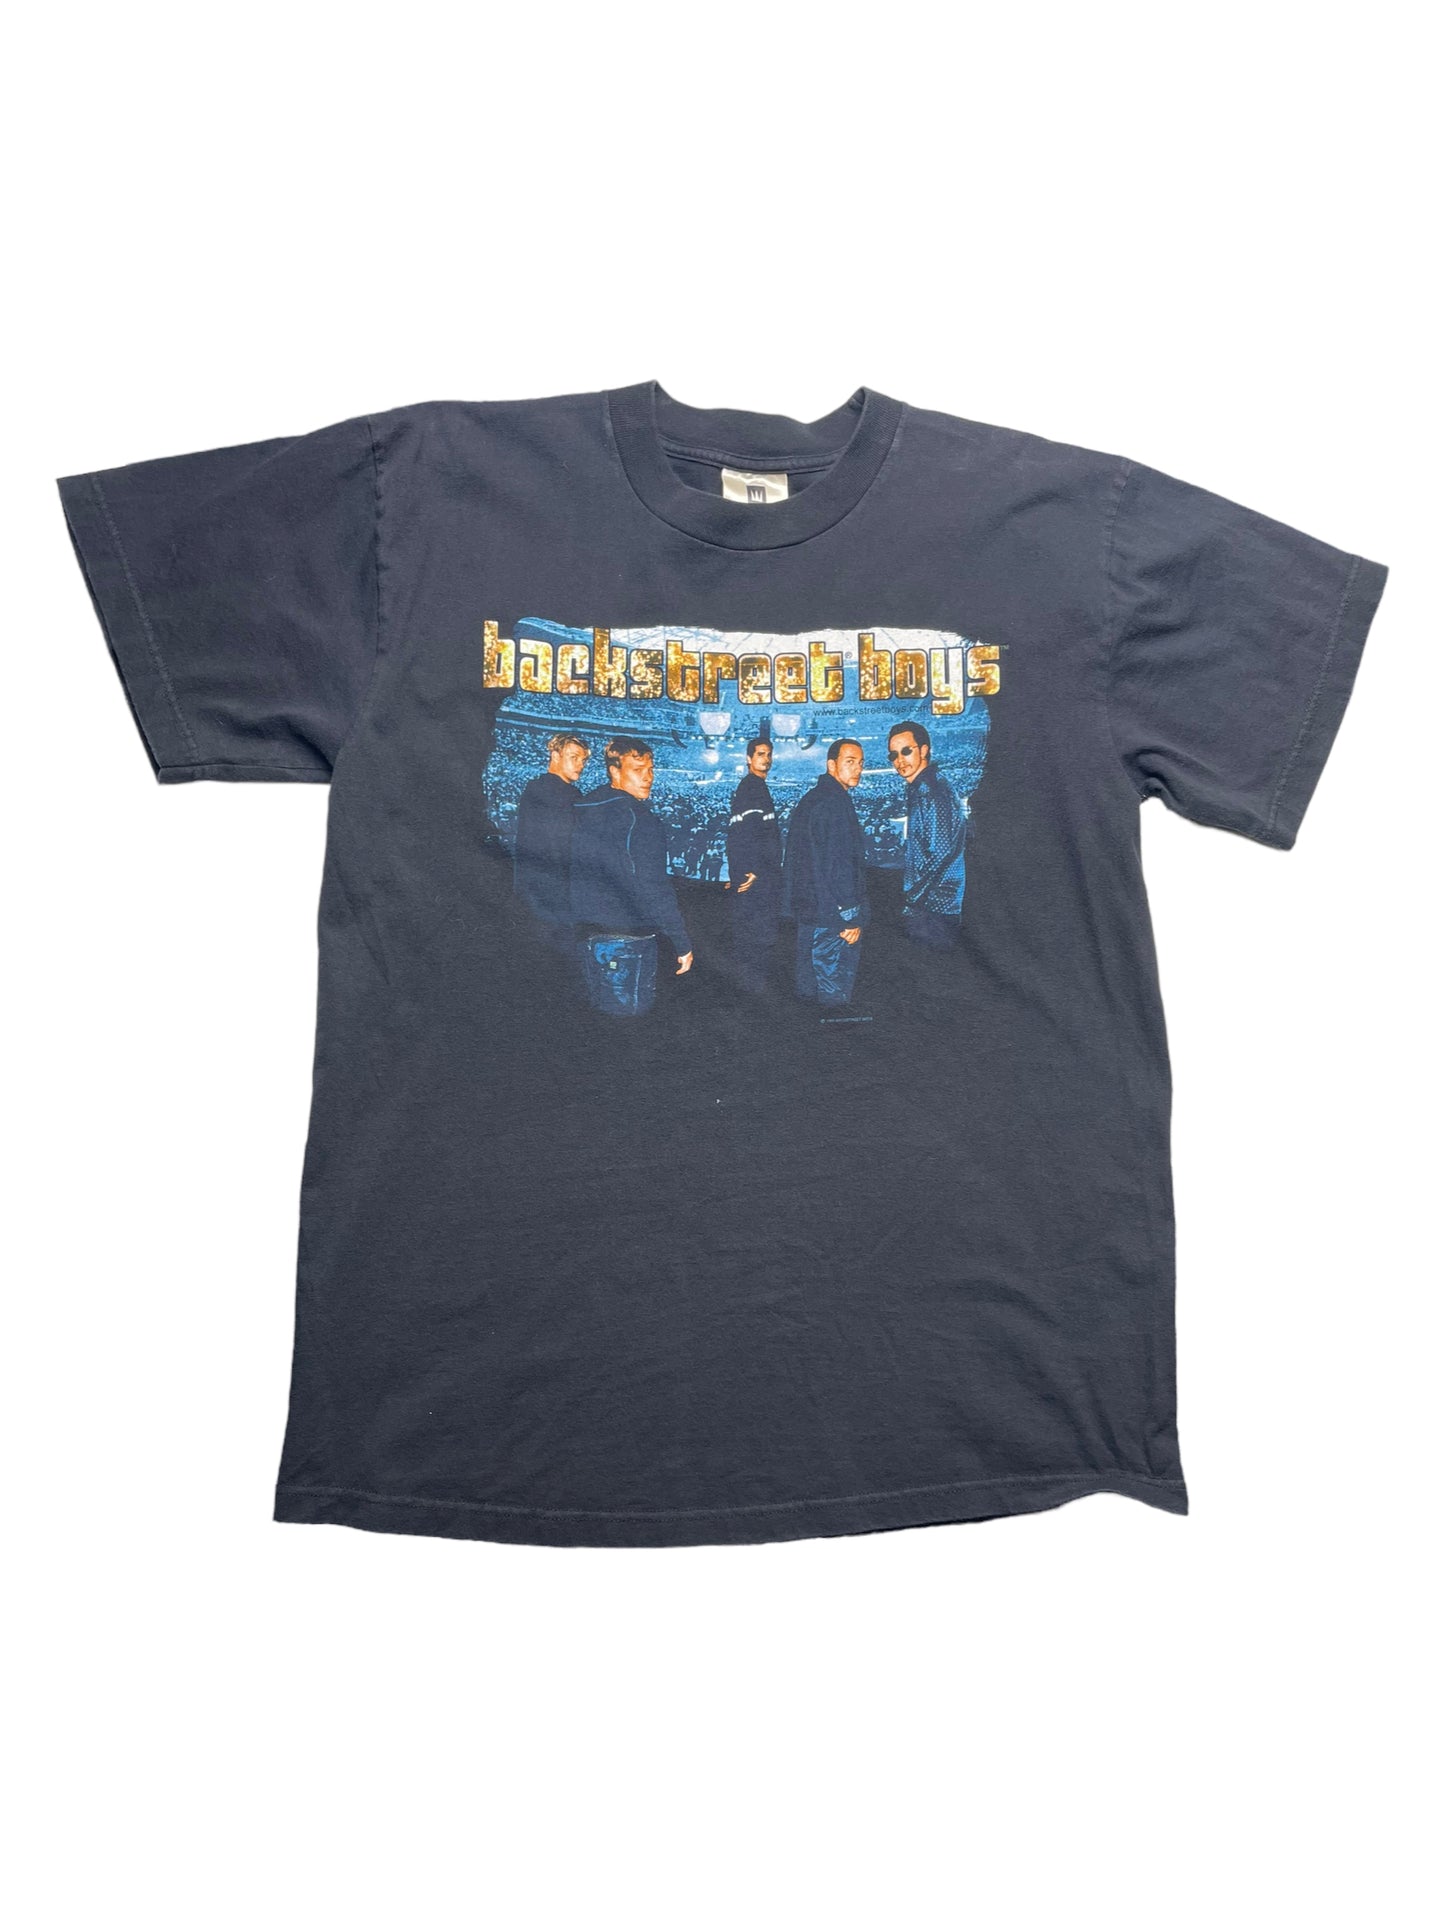 Vintage 1999 Backstreet Boys Tshirt Large